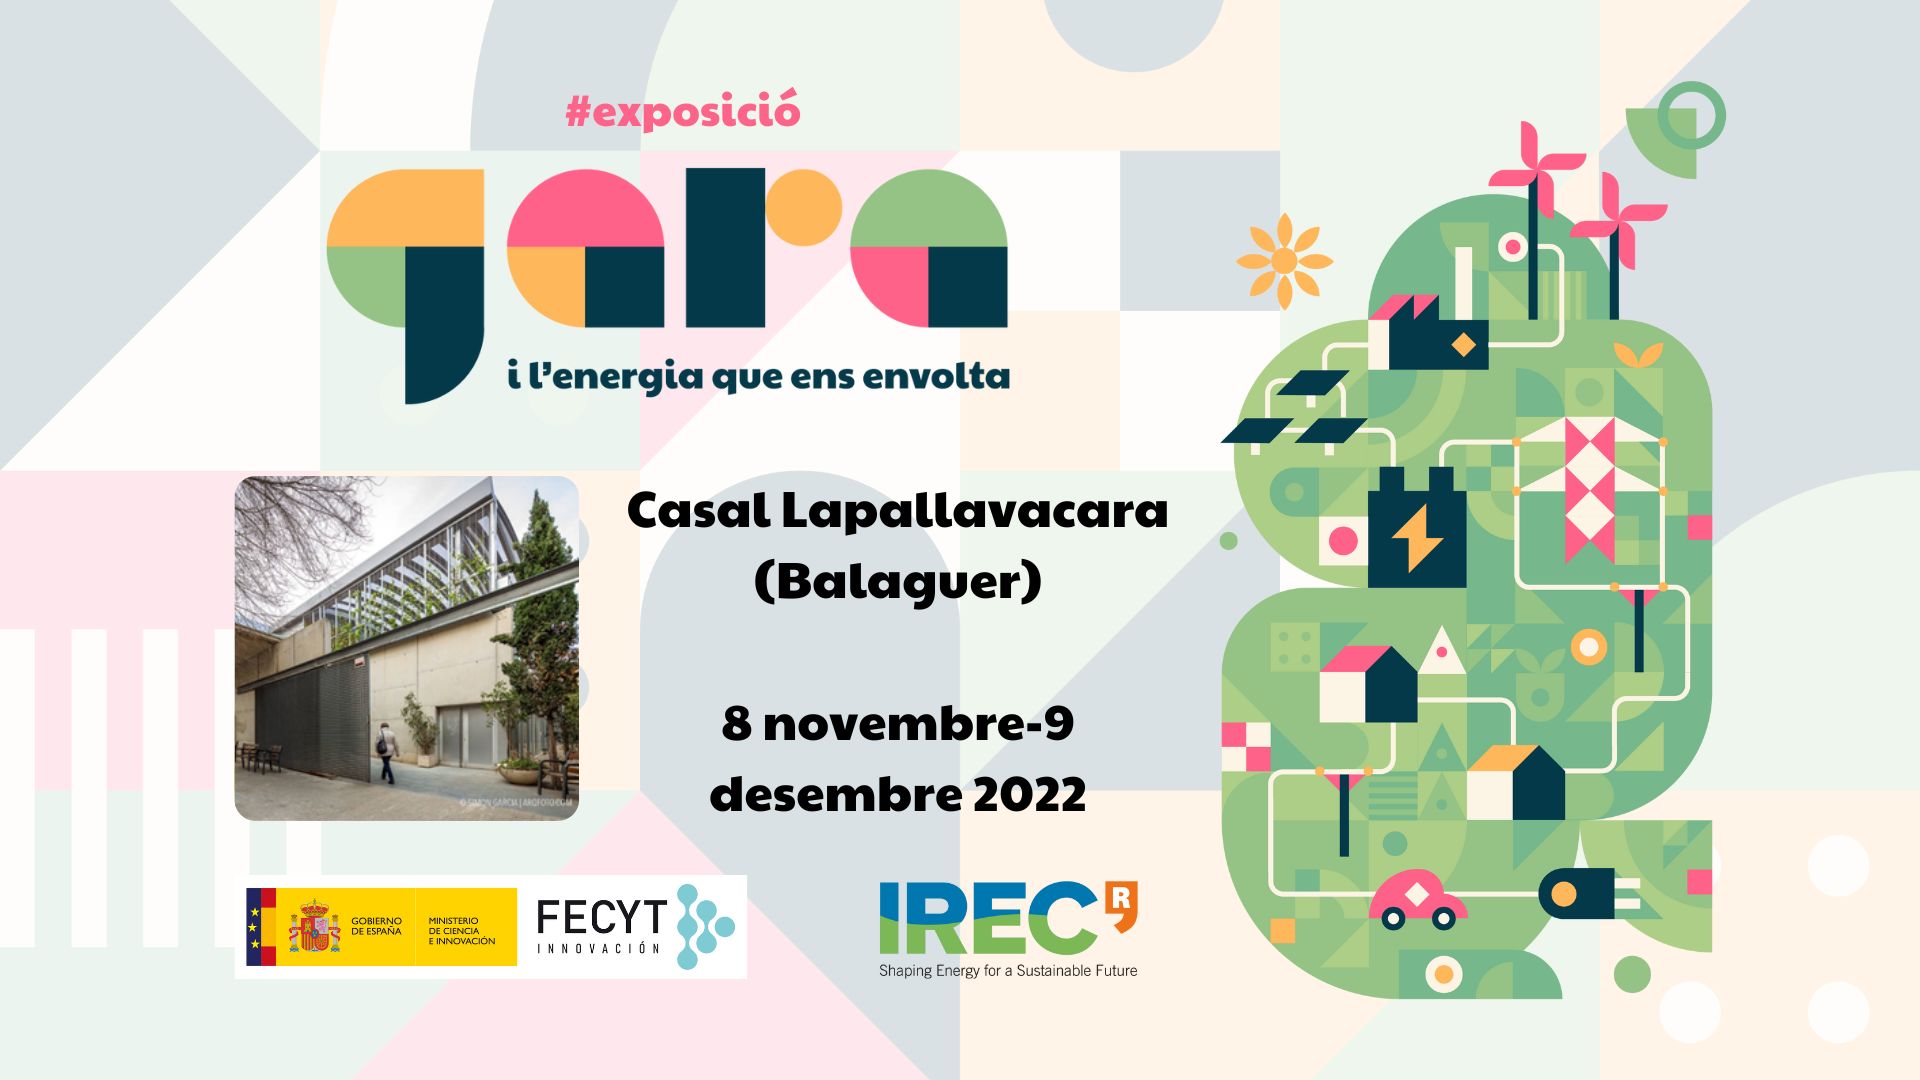 Exposició “Gara i l’energia que ens envolta 3.0”- Casal Lapallavacara - Balaguer GARA IREC FECYT